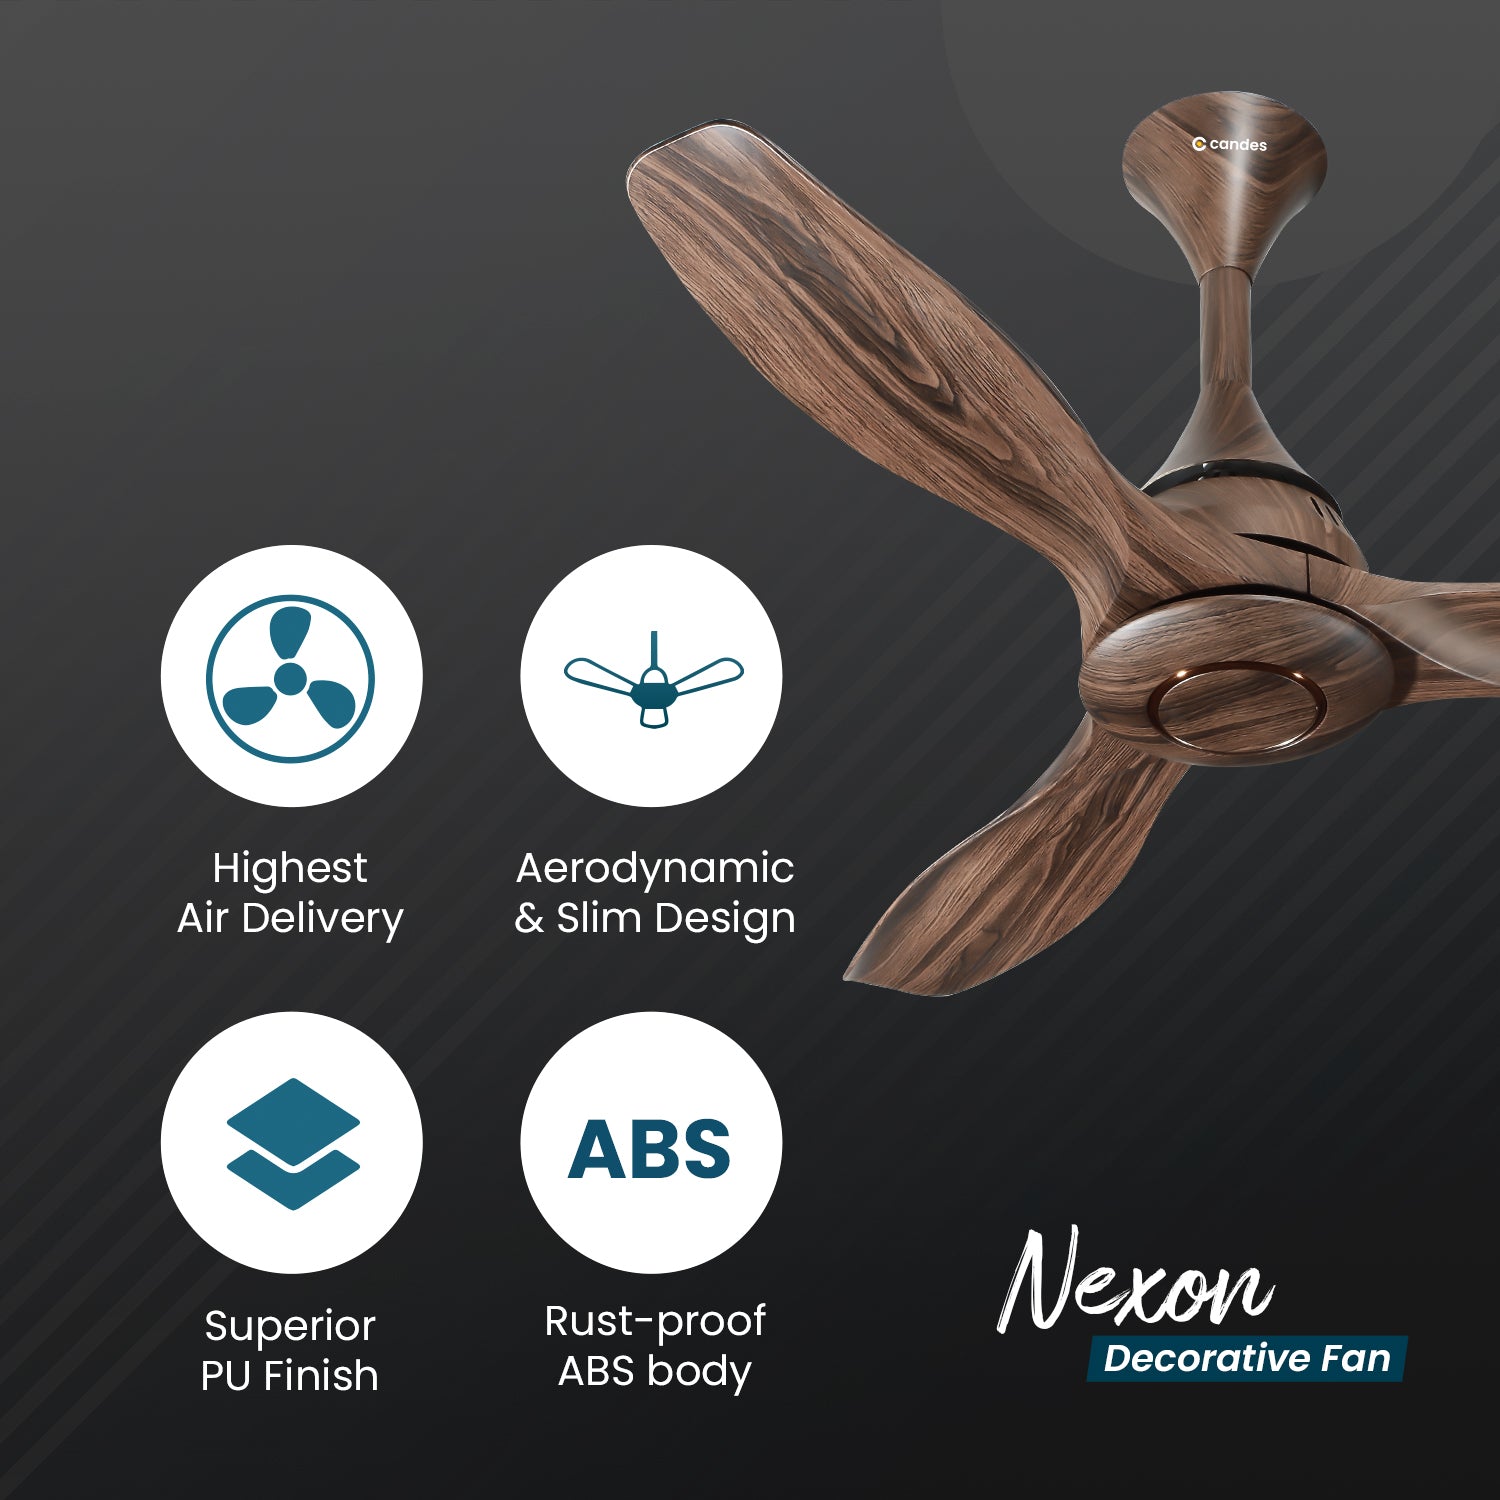 Nexon High Speed 1200 mm Designer Ceiling Fan Wooden